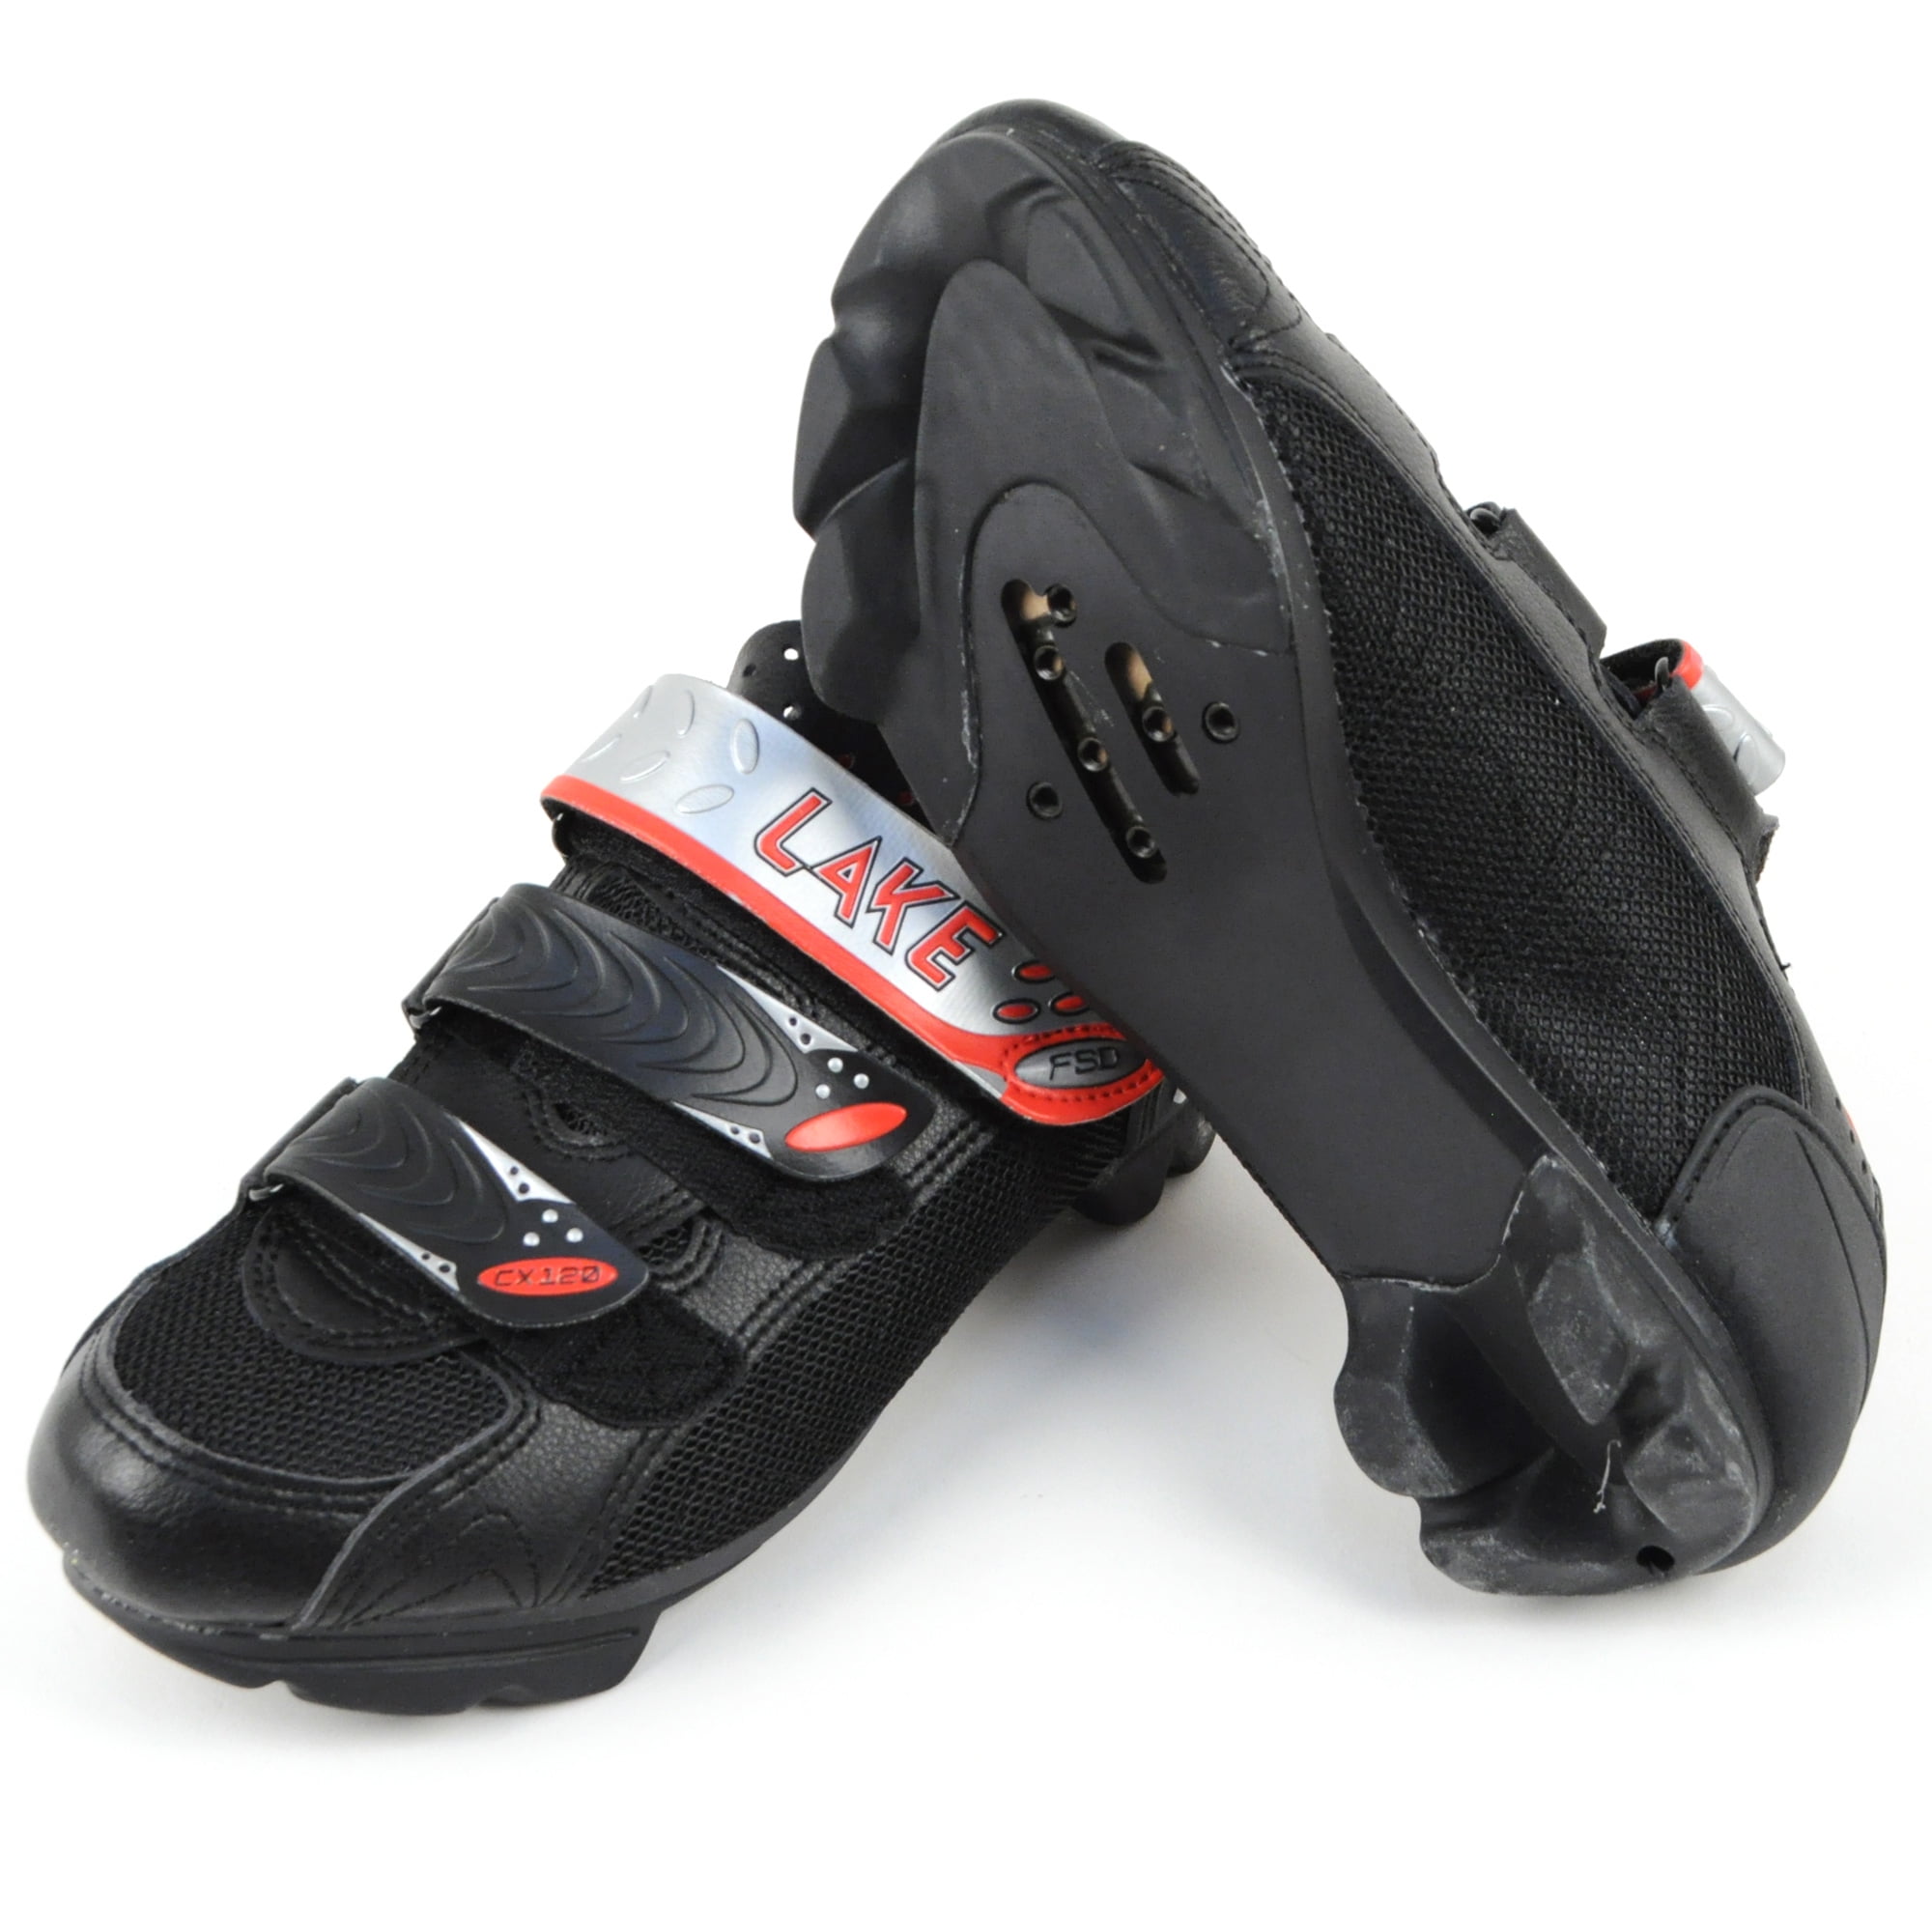 Lake CX 120 Black/Red MTB Cycling Shoes Size 43 